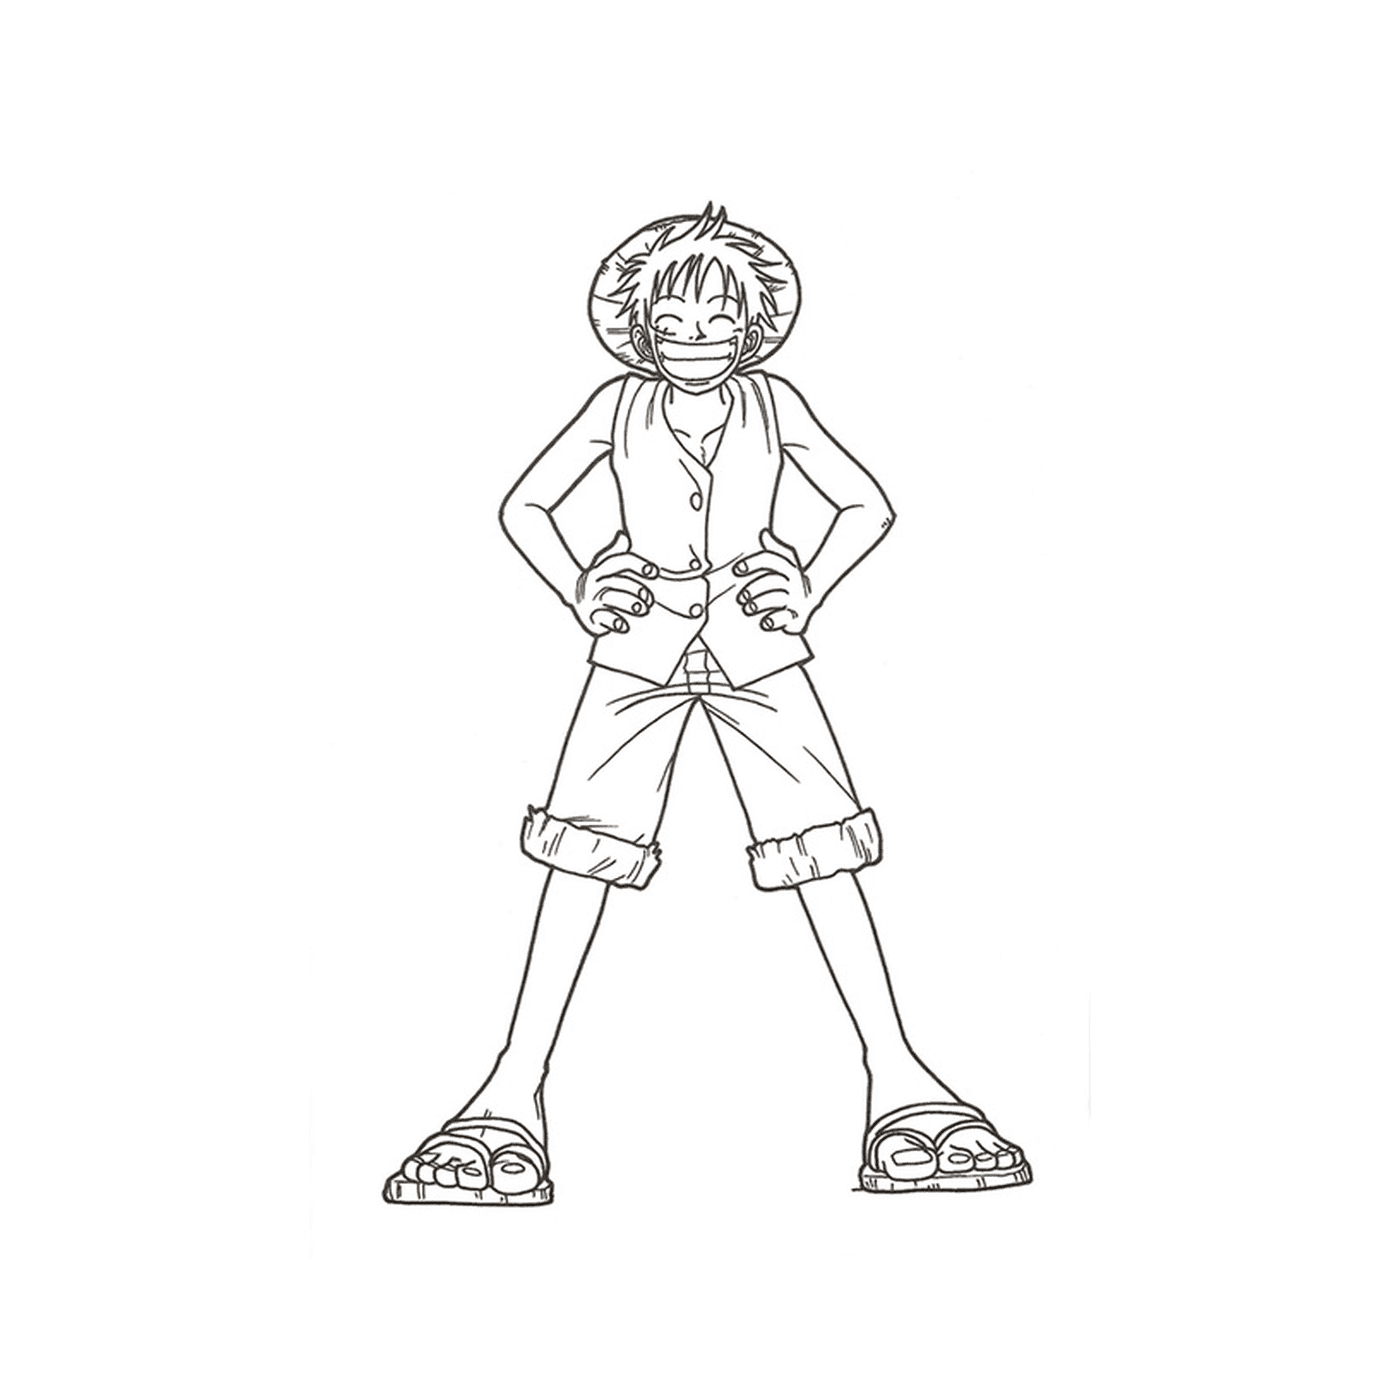  Monkey D Luffy in shorts 